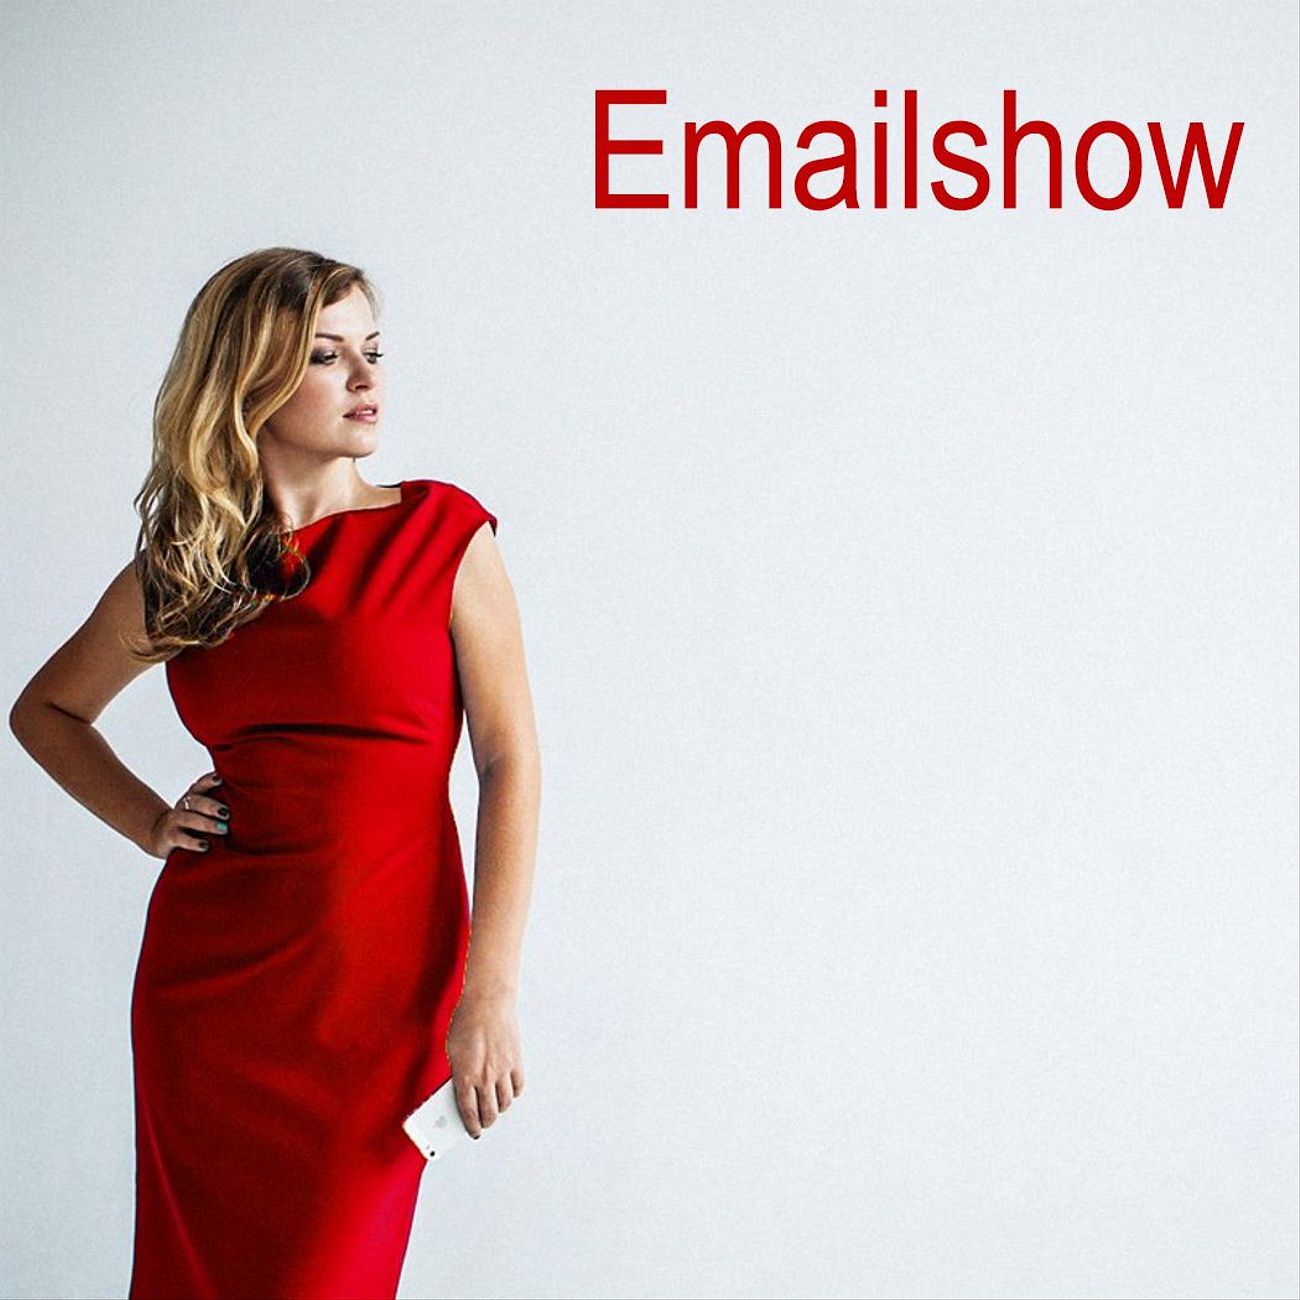 Emailshow